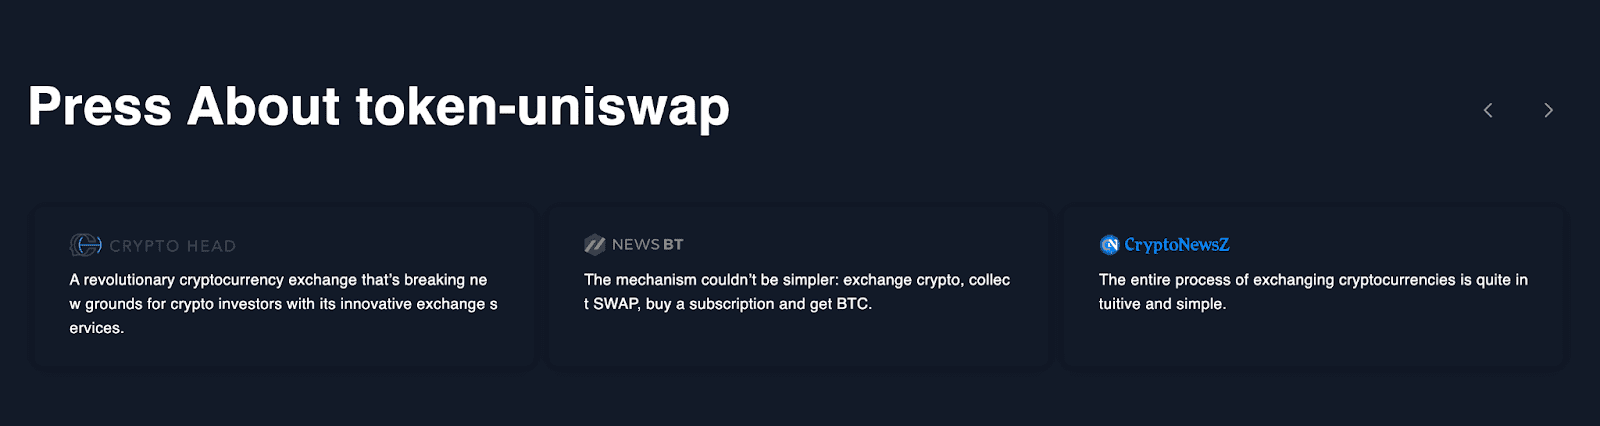 token uniswap org отзывы